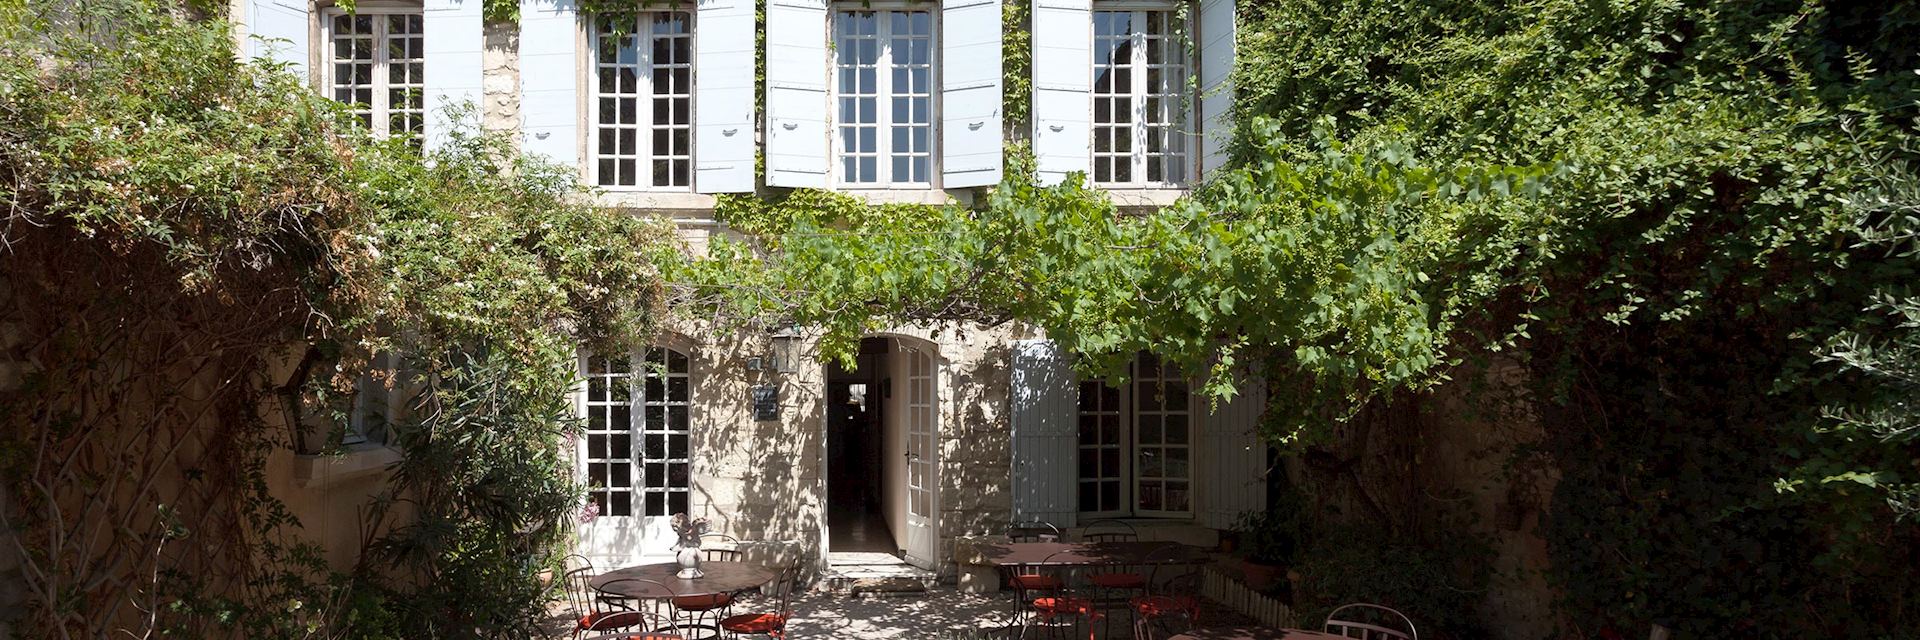 Hotel L'Atelier, Provence